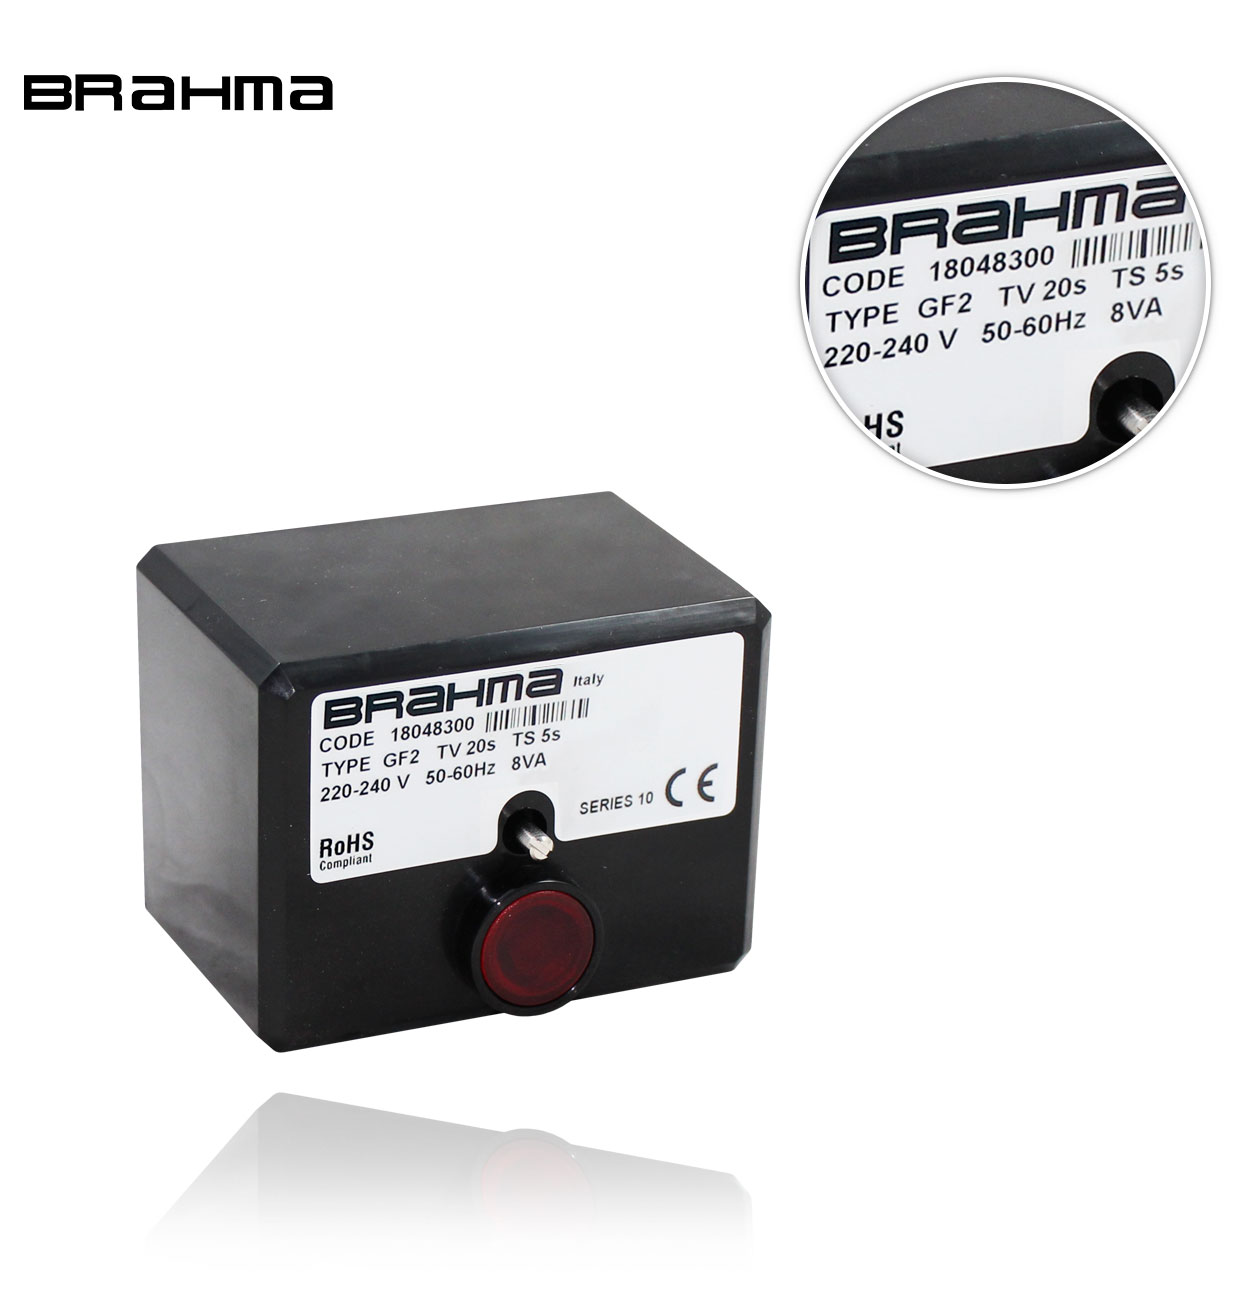 GF2 S10 TW20 TS5 220-240V/50-60Hz  (GF3 S03) BRAHMA CONTROL BOX